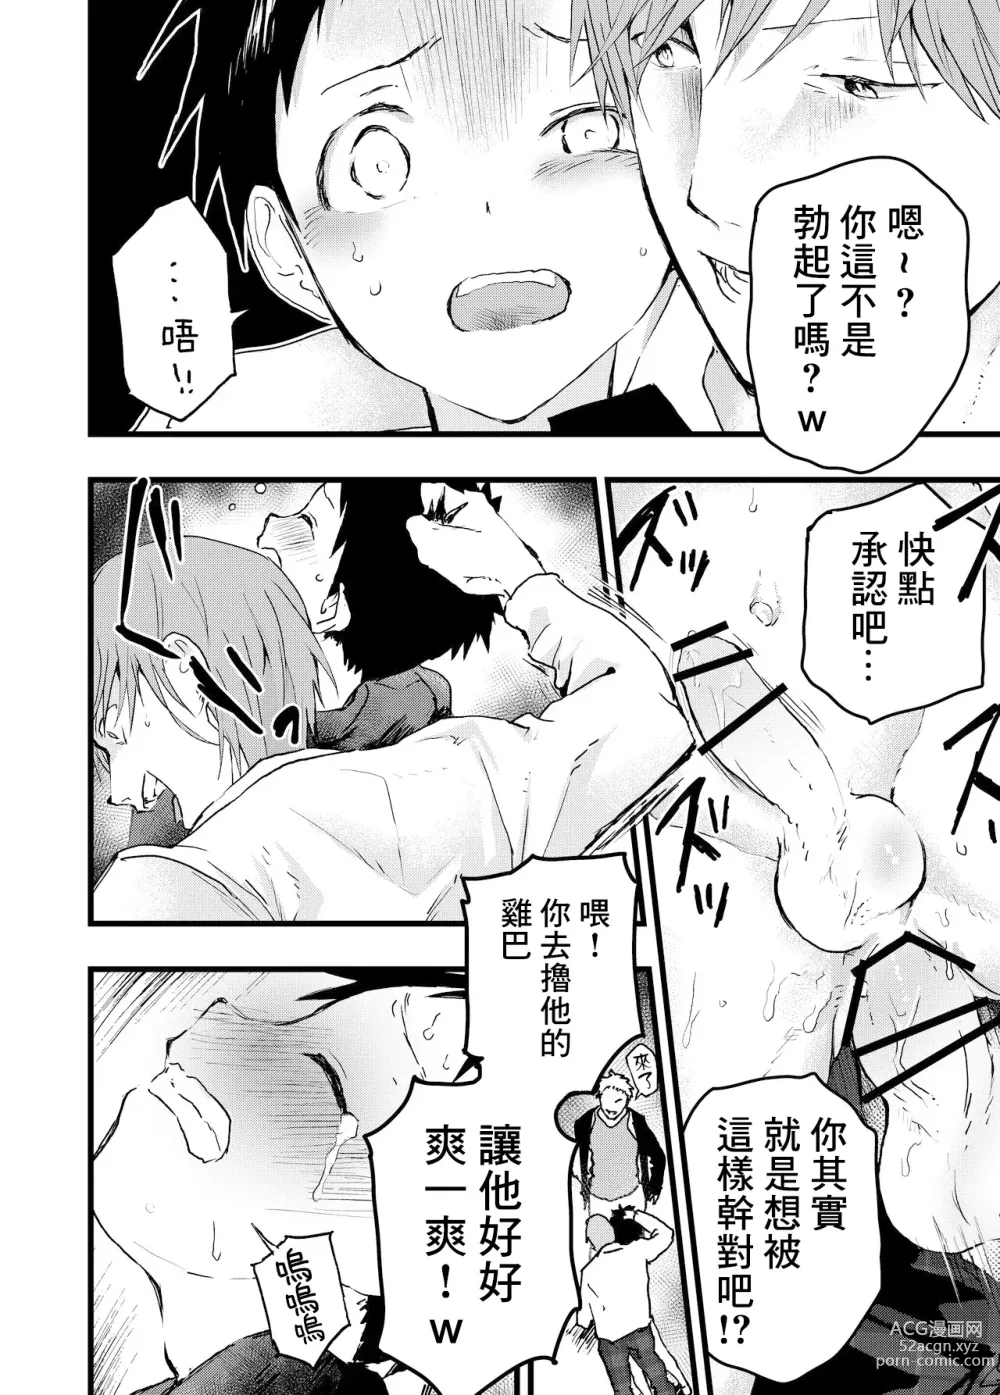 Page 6 of doujinshi 被癡漢強姦後墮入快樂深淵的少年